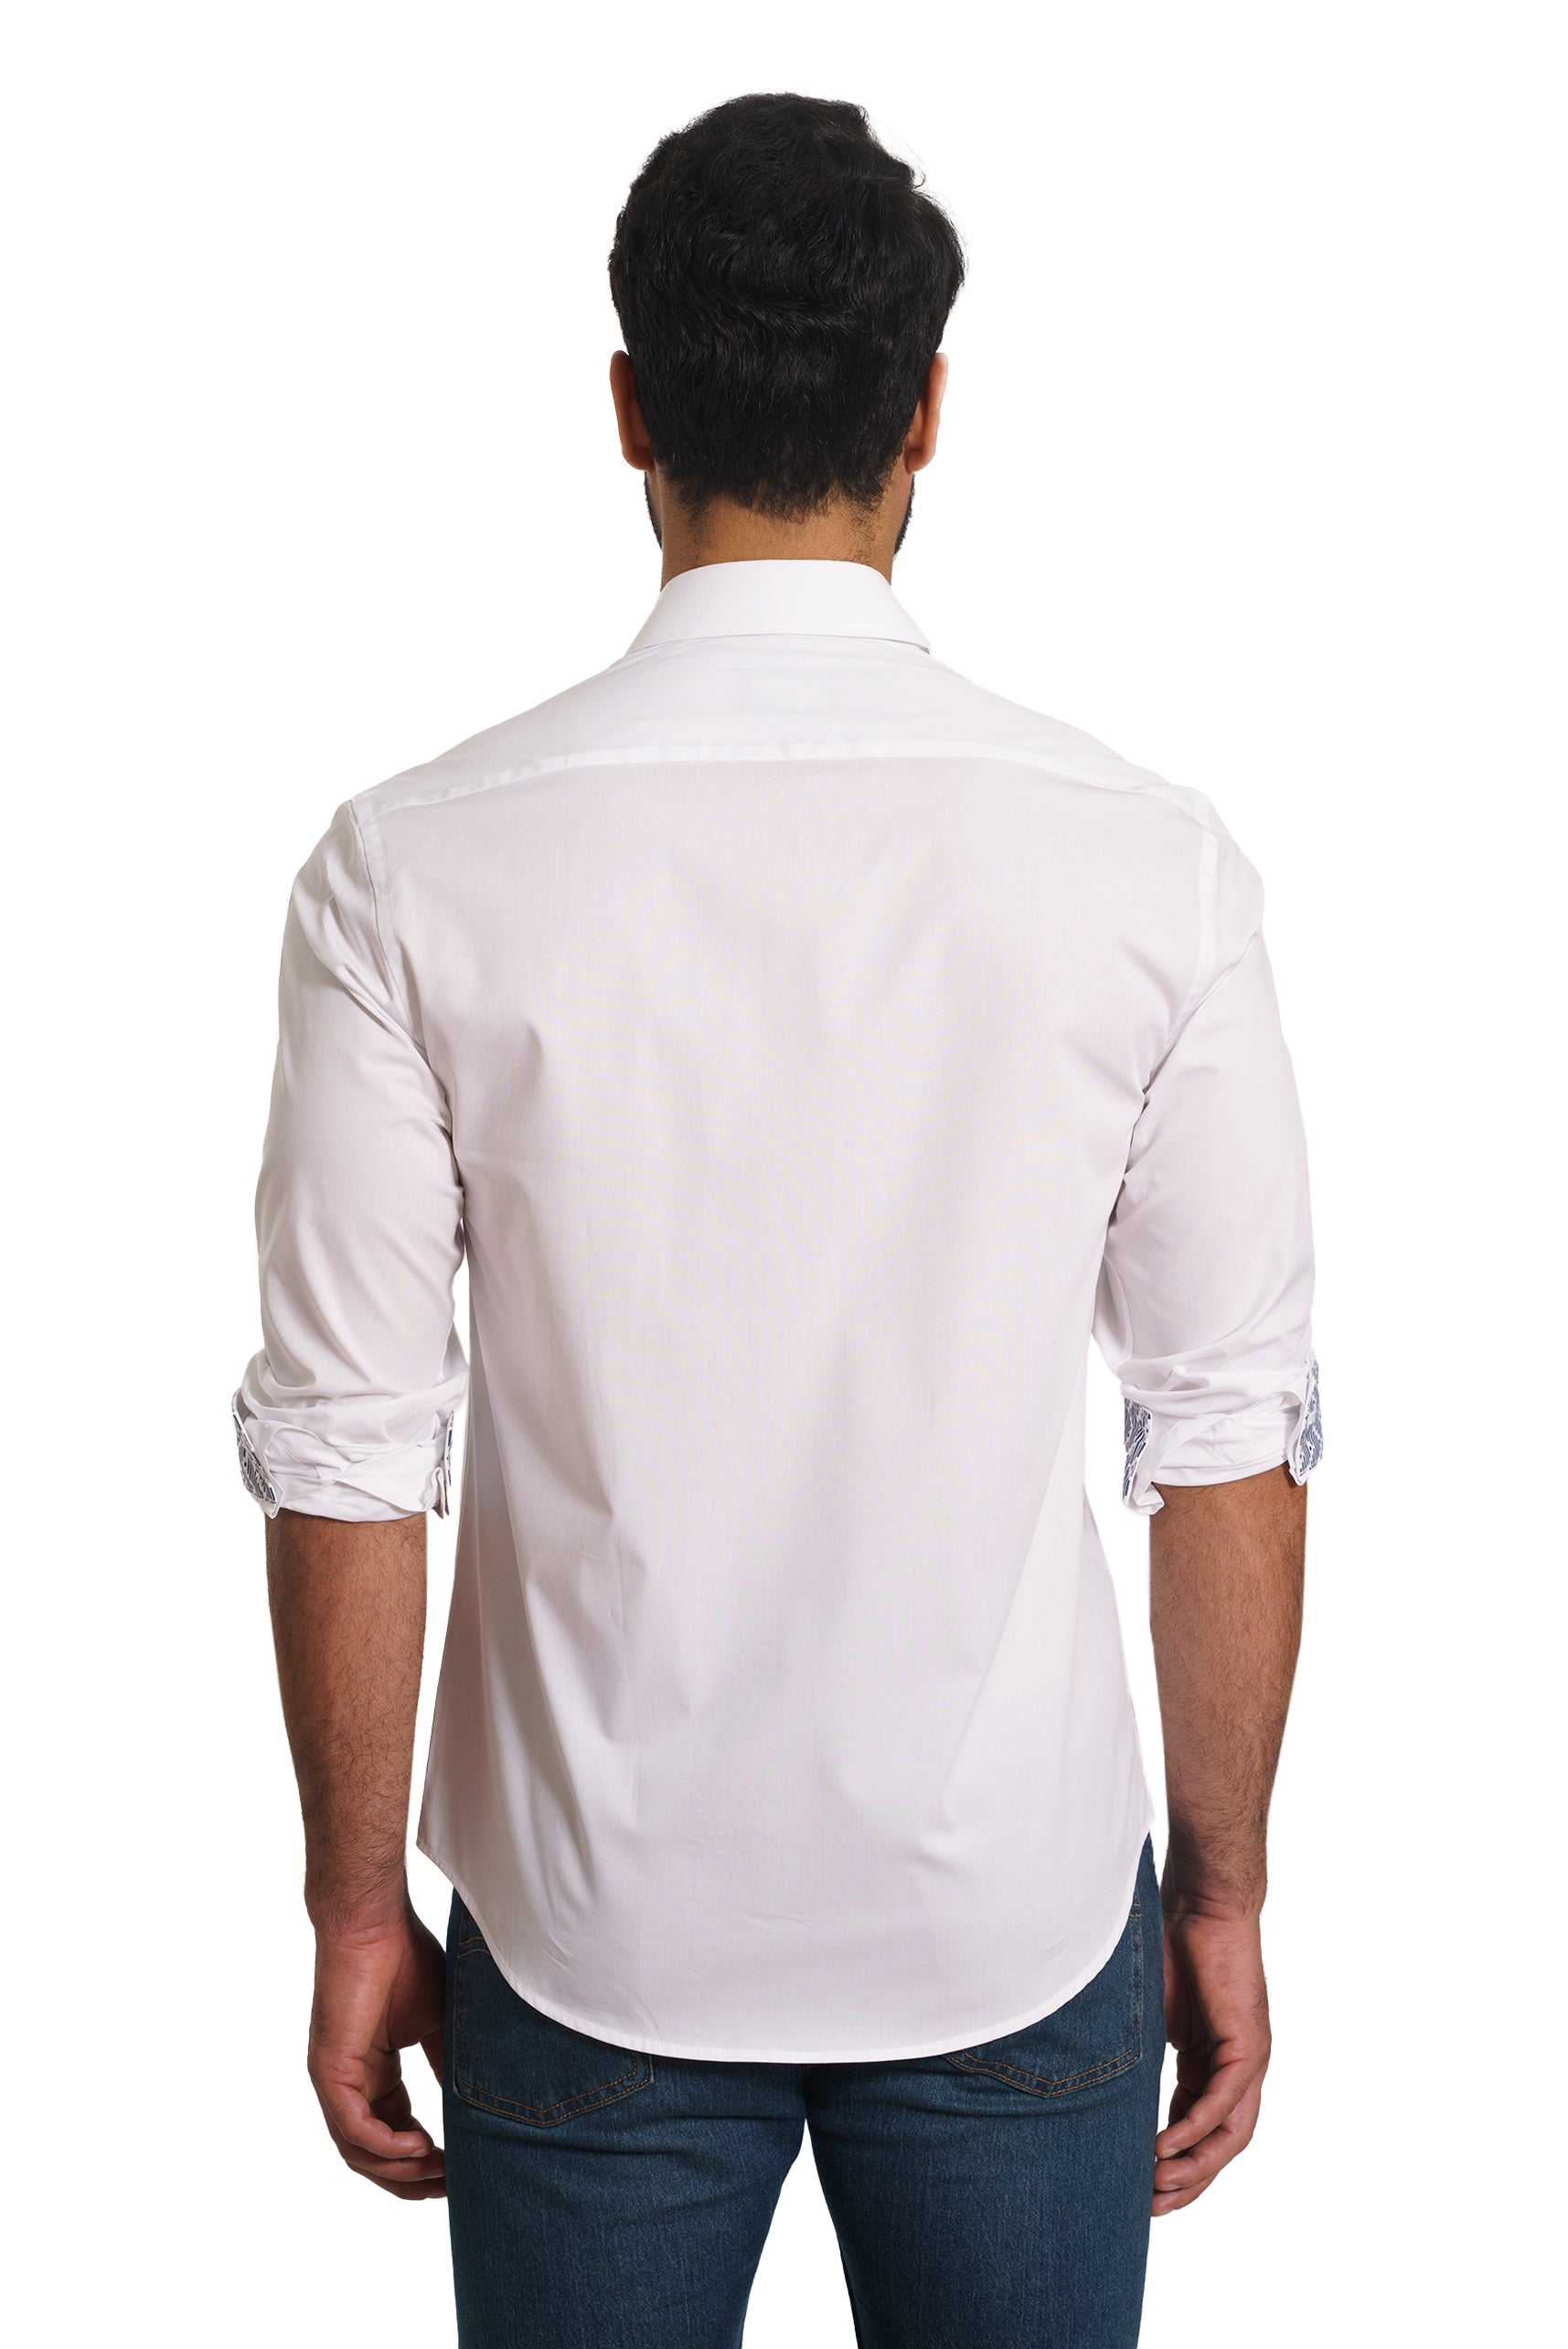 White Long Sleeve Shirt TP-7151 Back